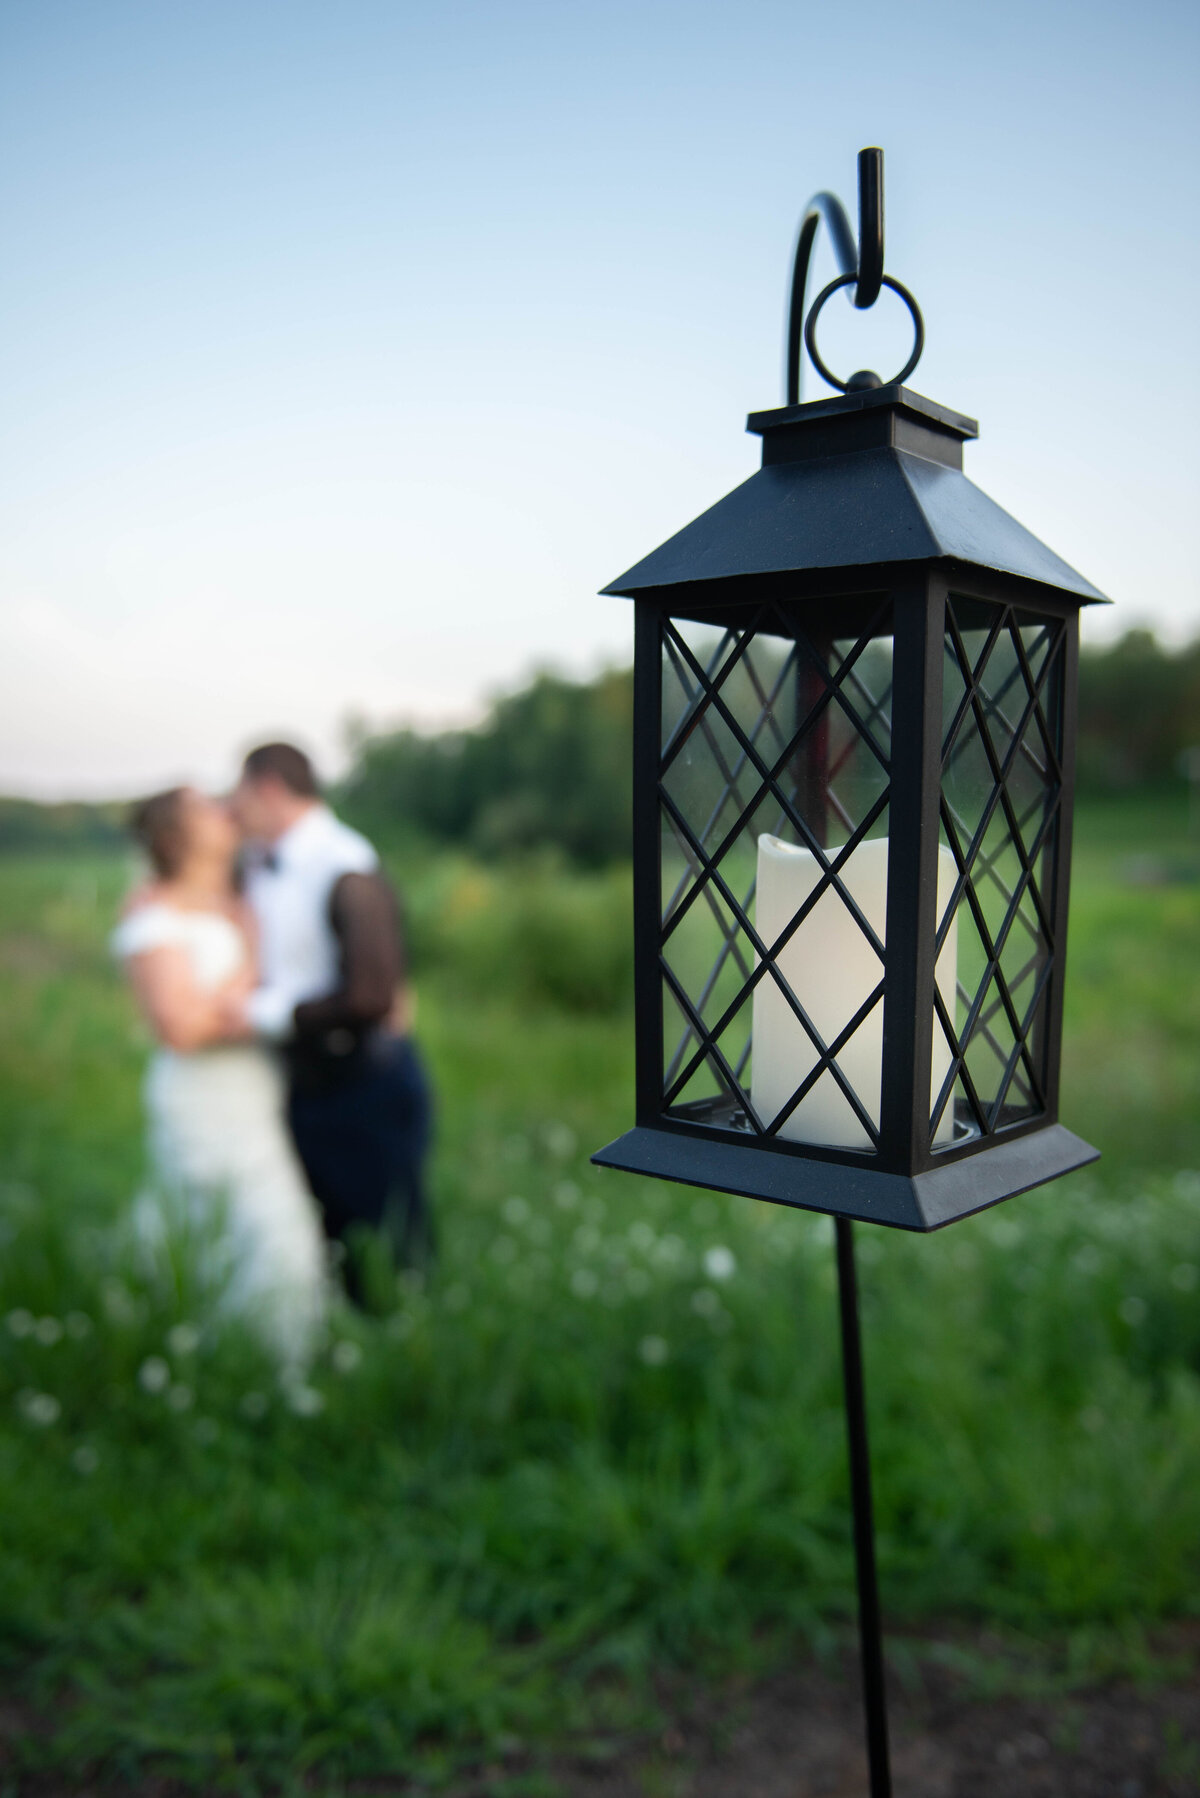 Romantic Blue Wedding | Minnesota Wedding Photographer